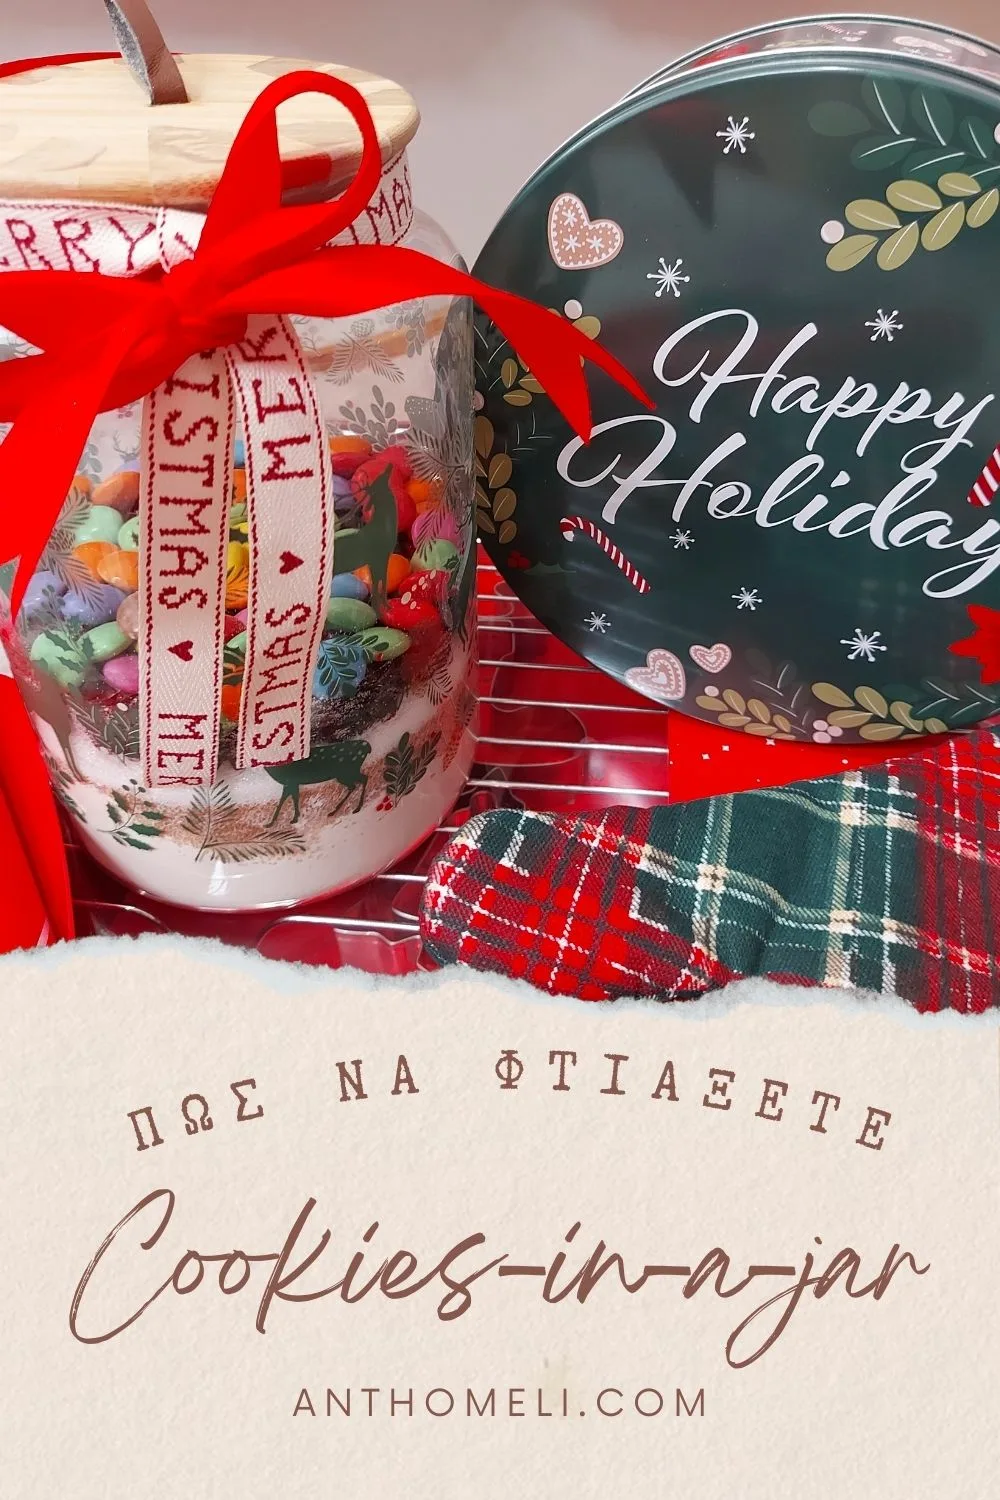 Cookies-in-a-jar (μείγμα για μπισκότα σε βάζο) για δώρο Χριστουγέννων 4